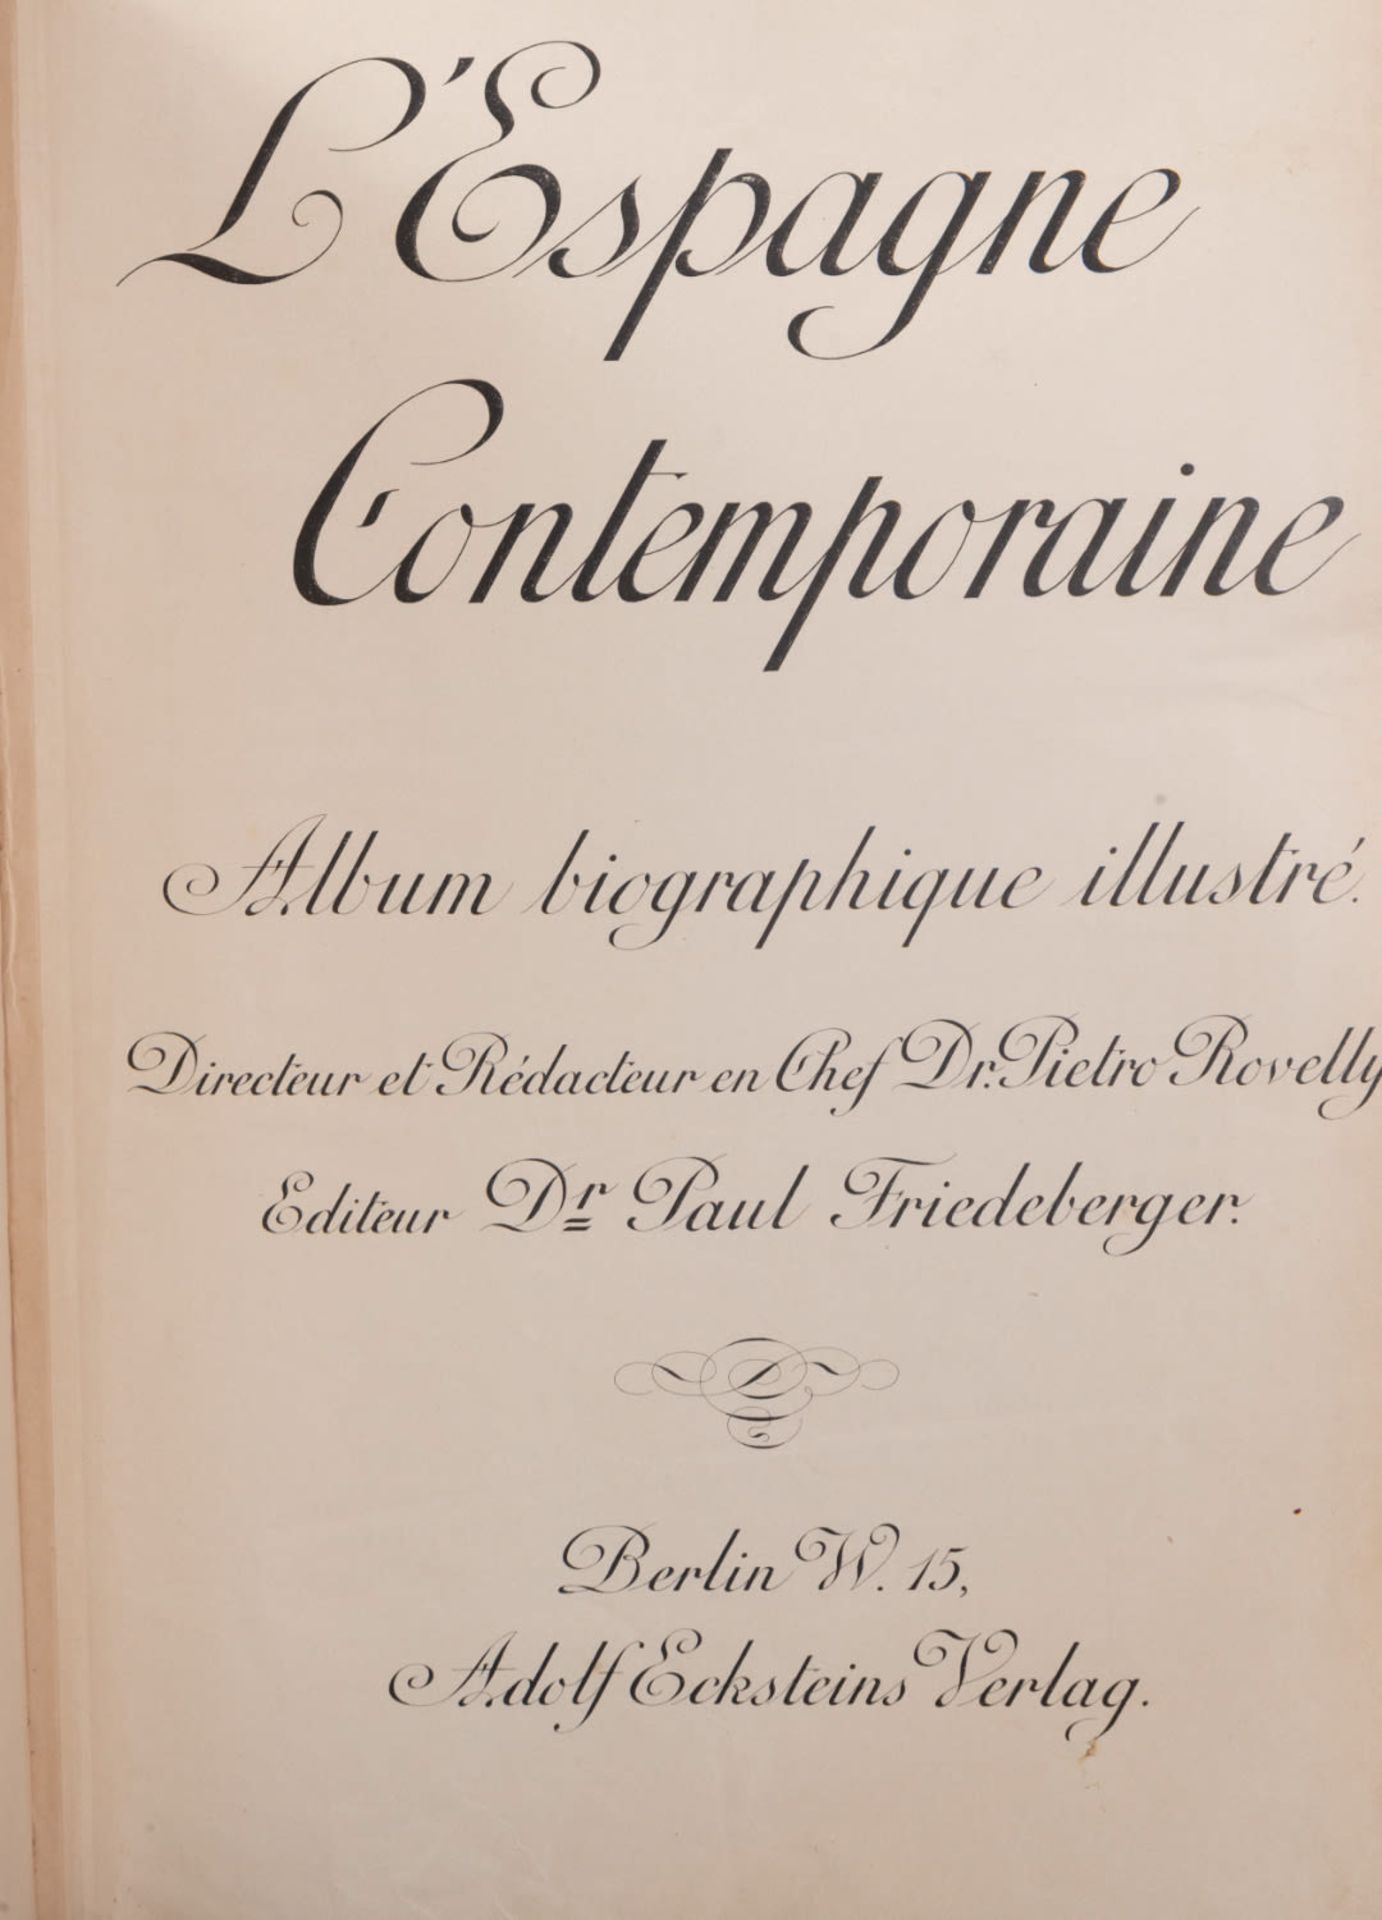 Book "l'Espagne Contemporaine", 19th century - Image 2 of 8